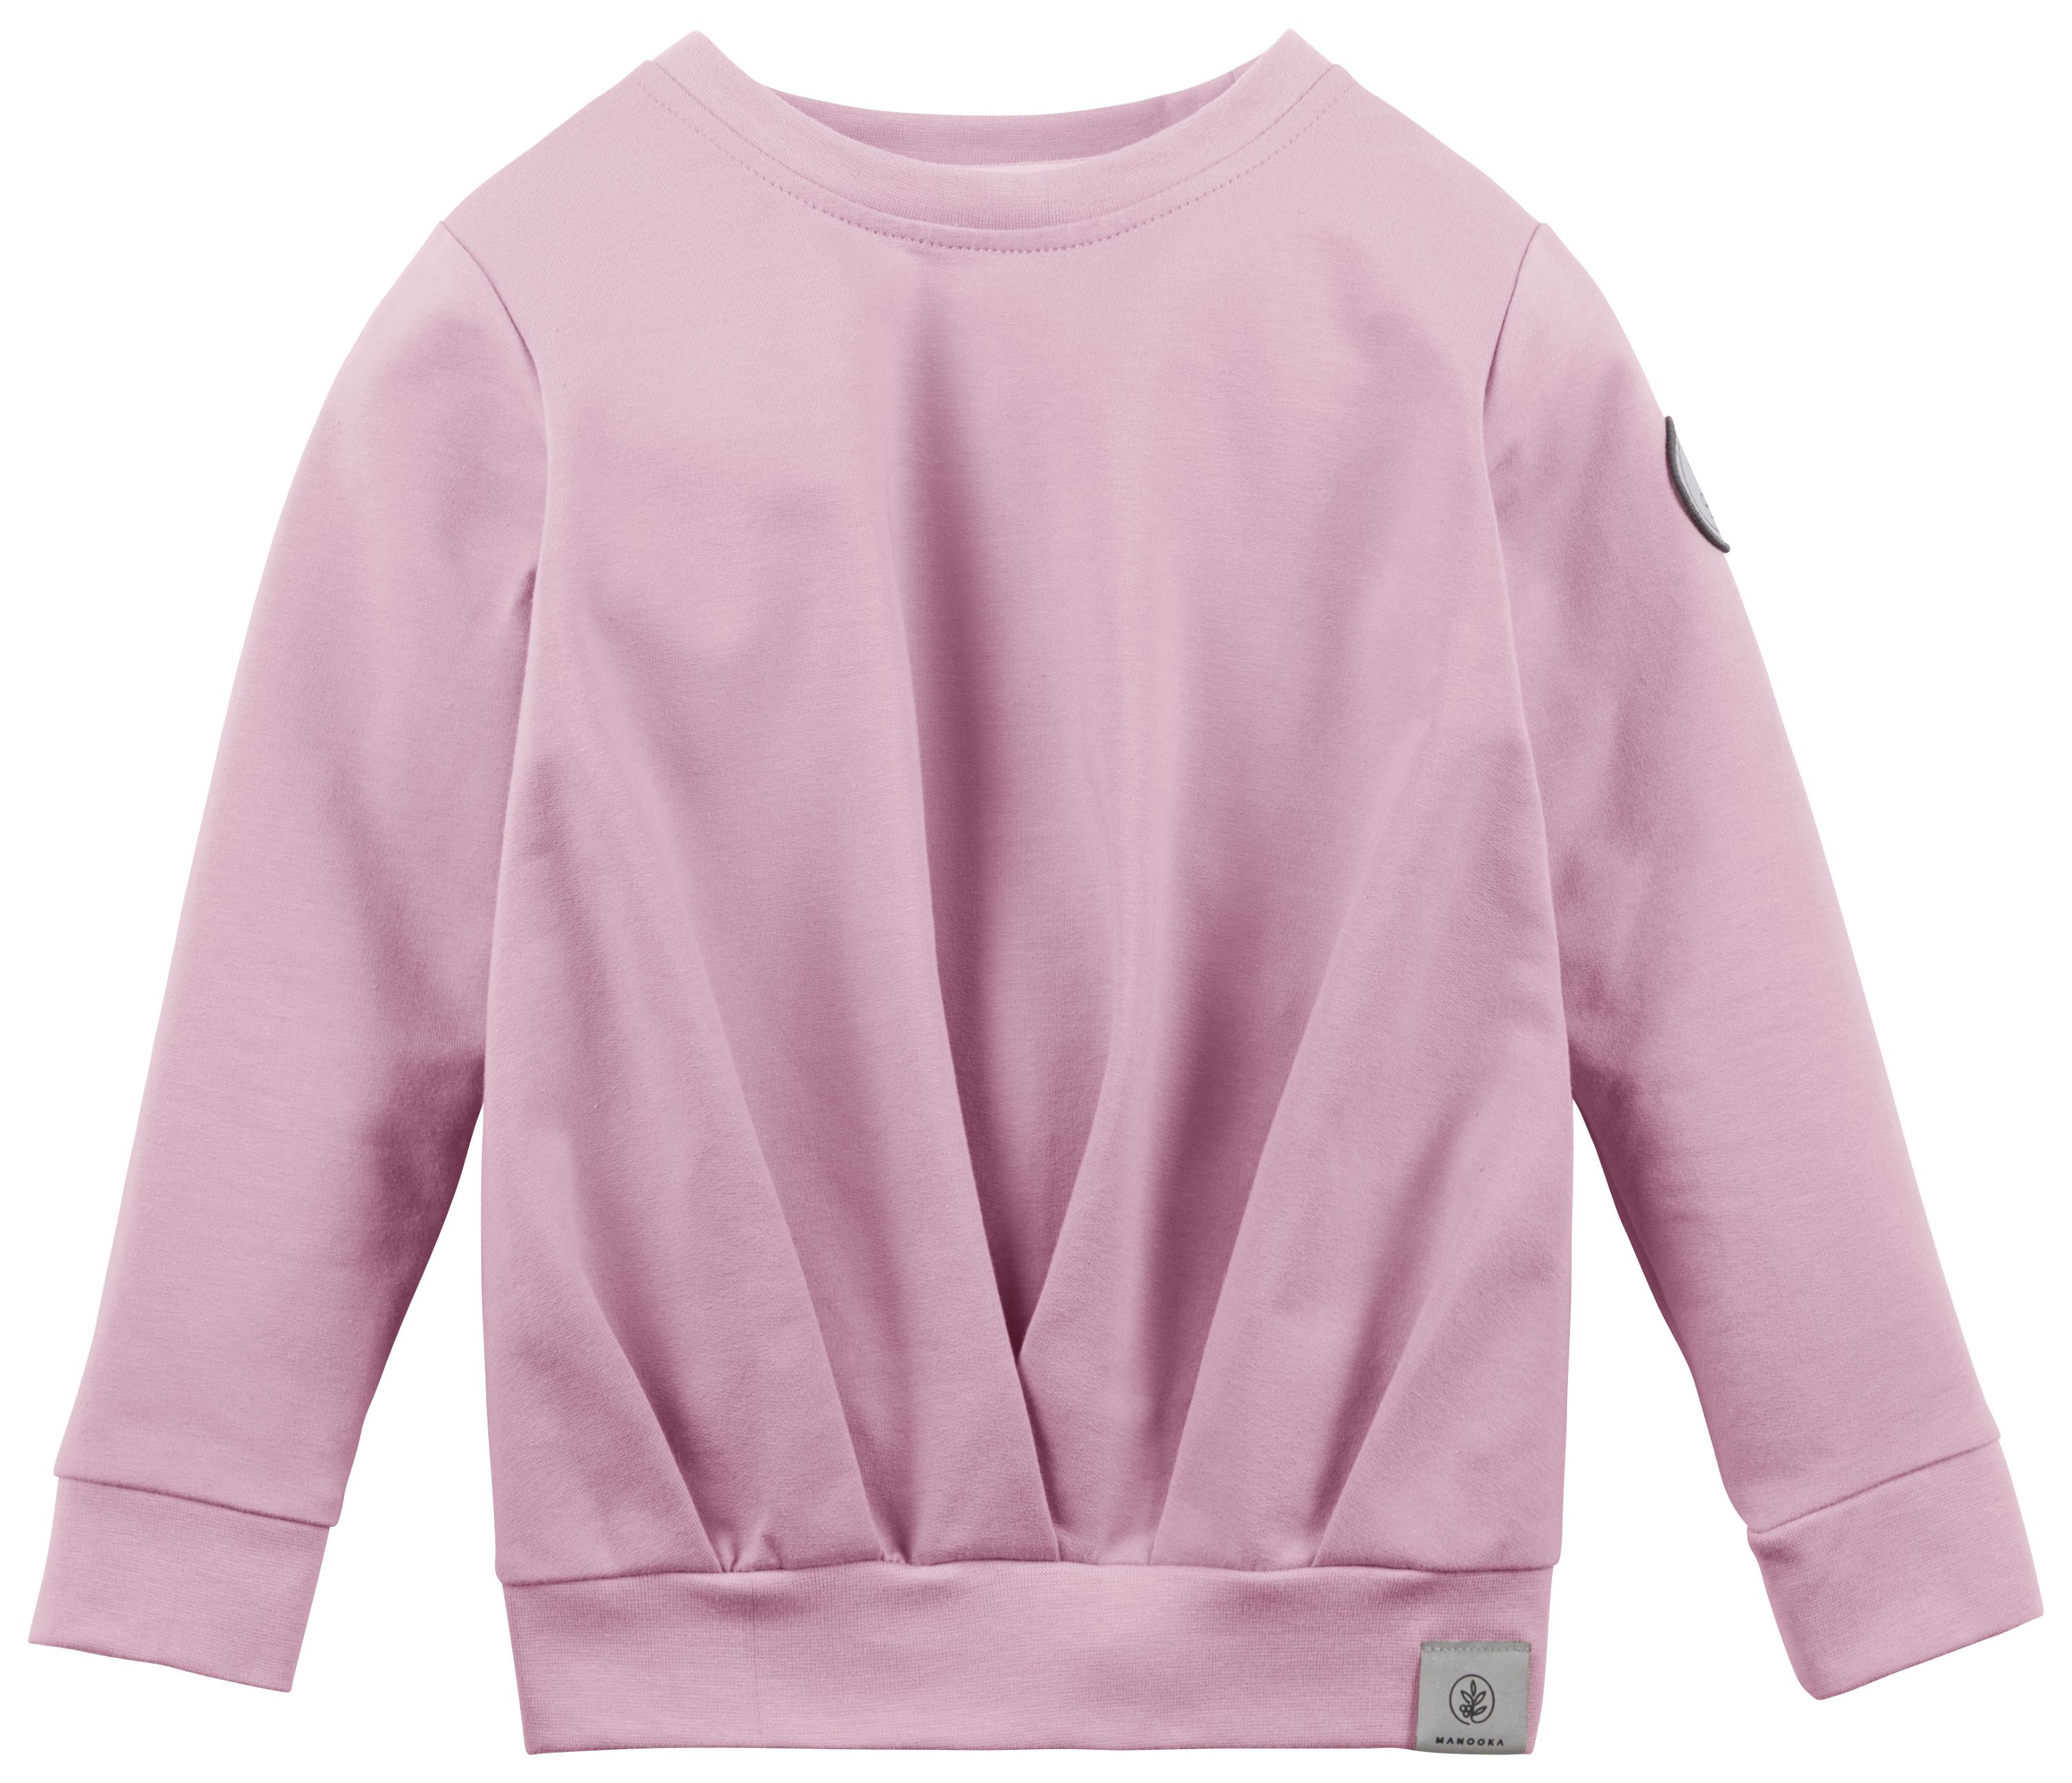 Ein rosa FancyFriday-Sweatshirt